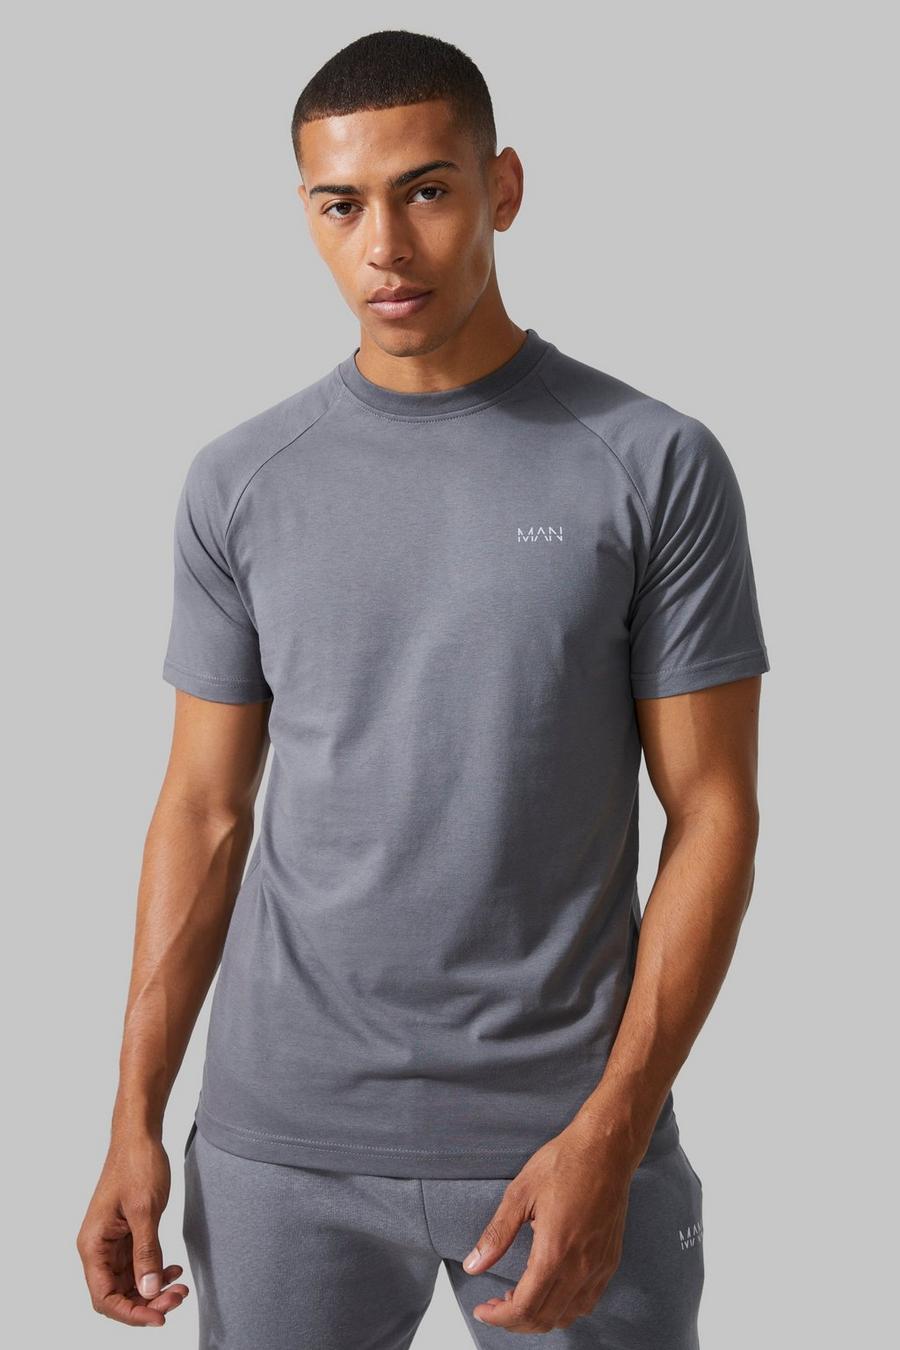 Man Active Gym Raglan T-Shirt, Charcoal